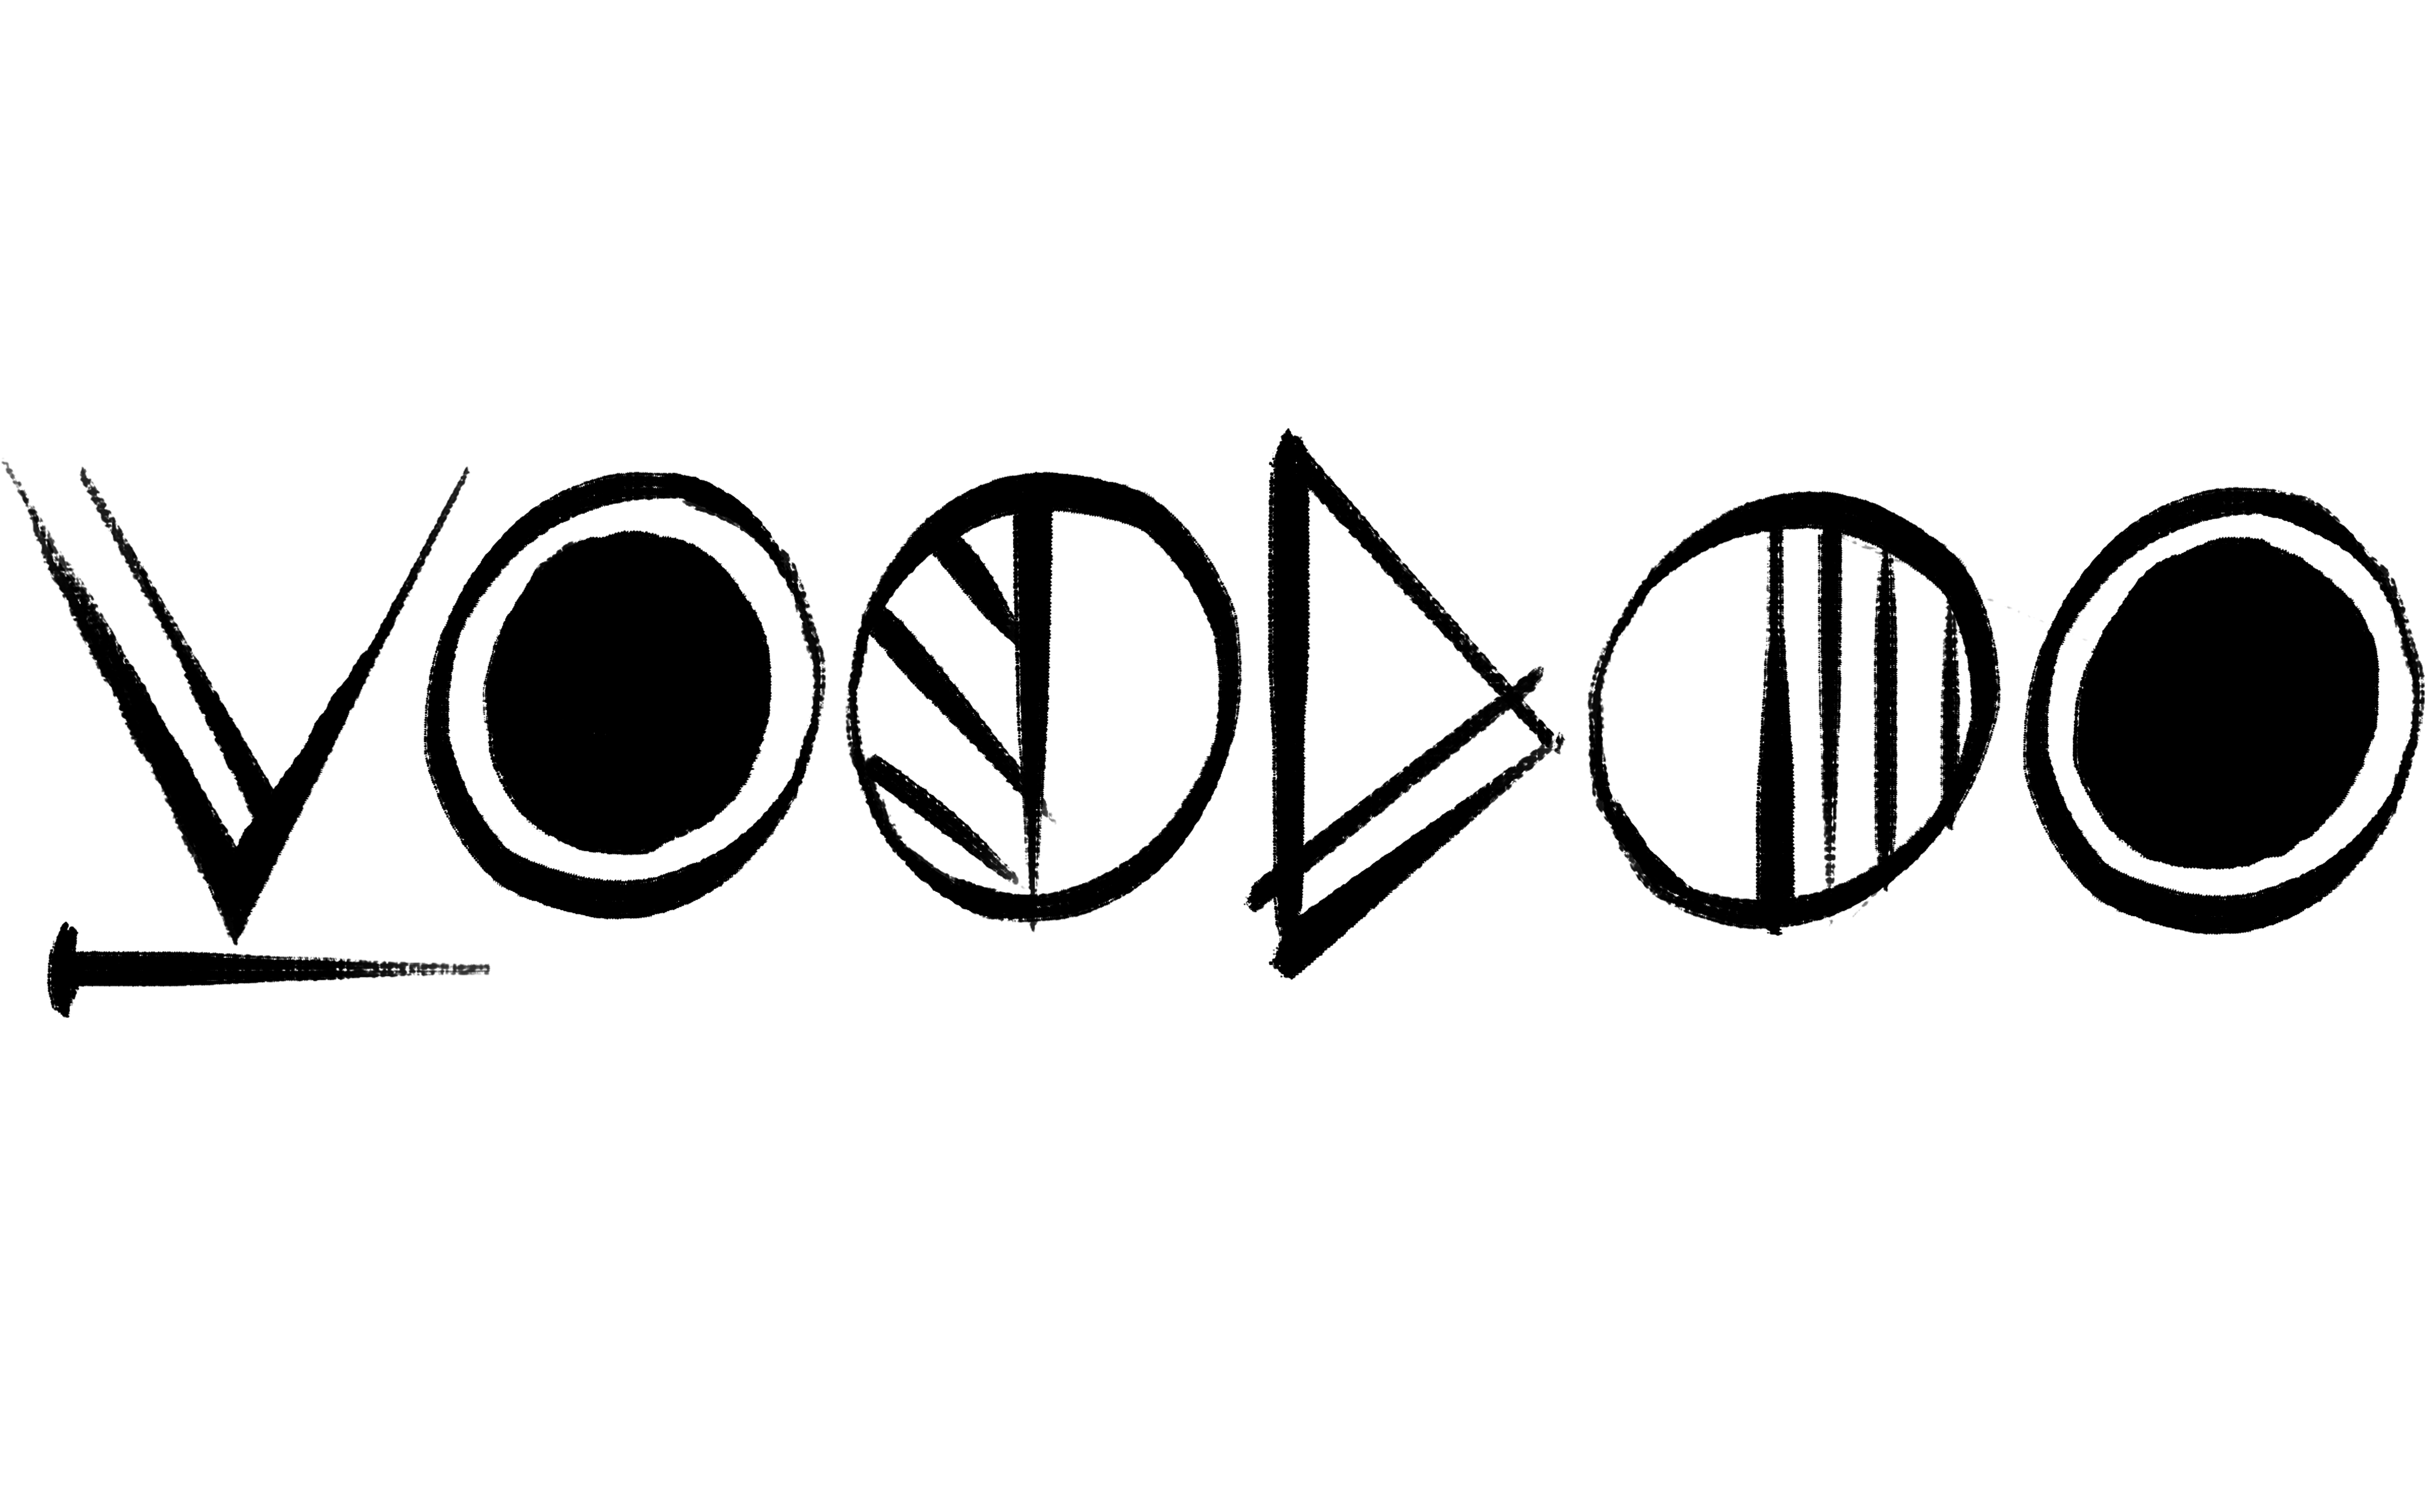 Voodoo Logo - File:Voodoo video game logo.png - Wikimedia Commons